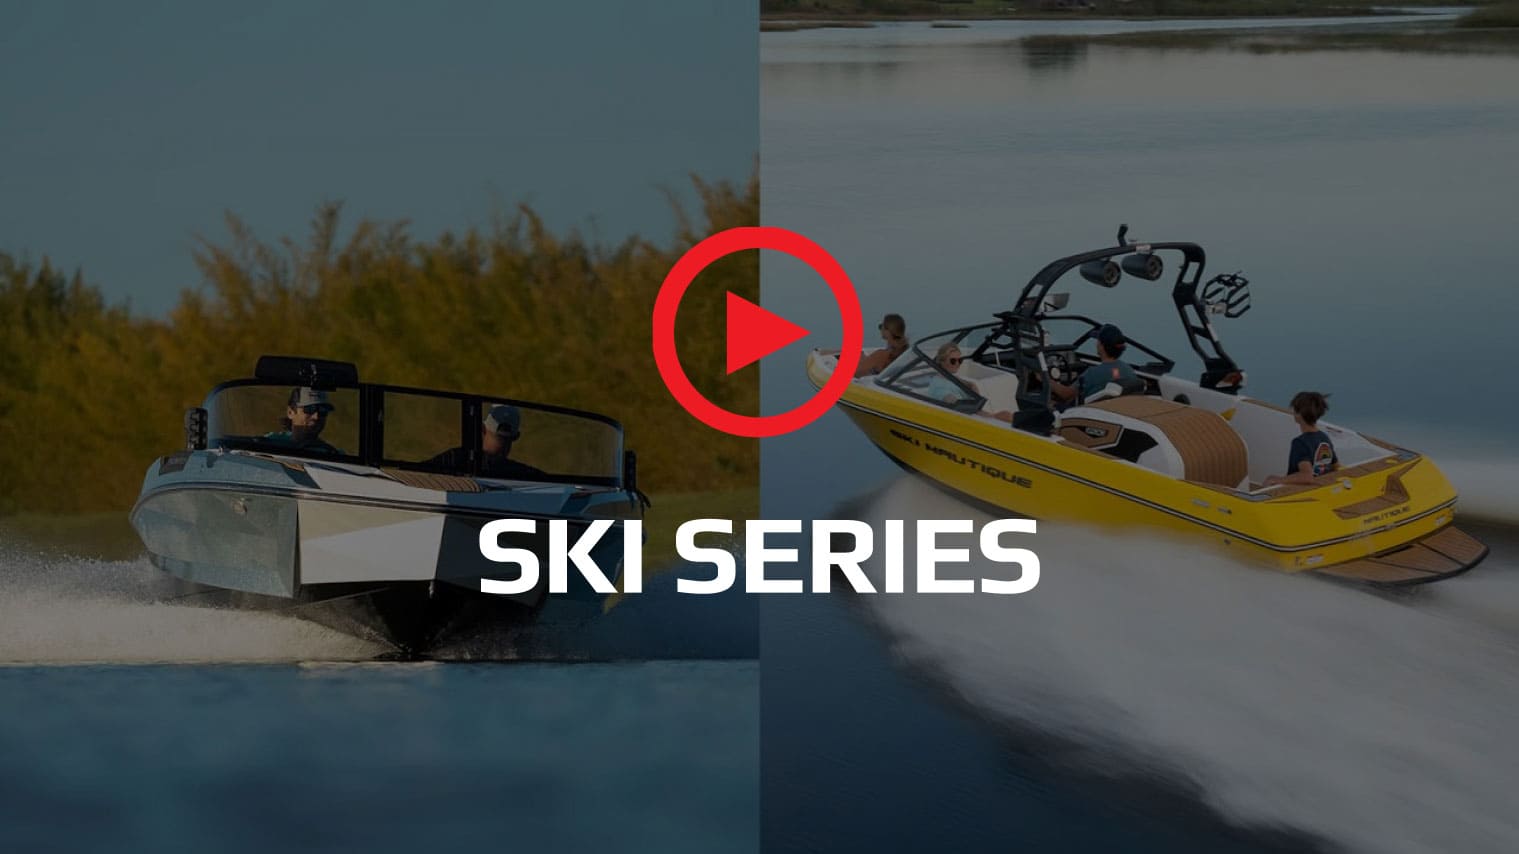 Ski series Overview